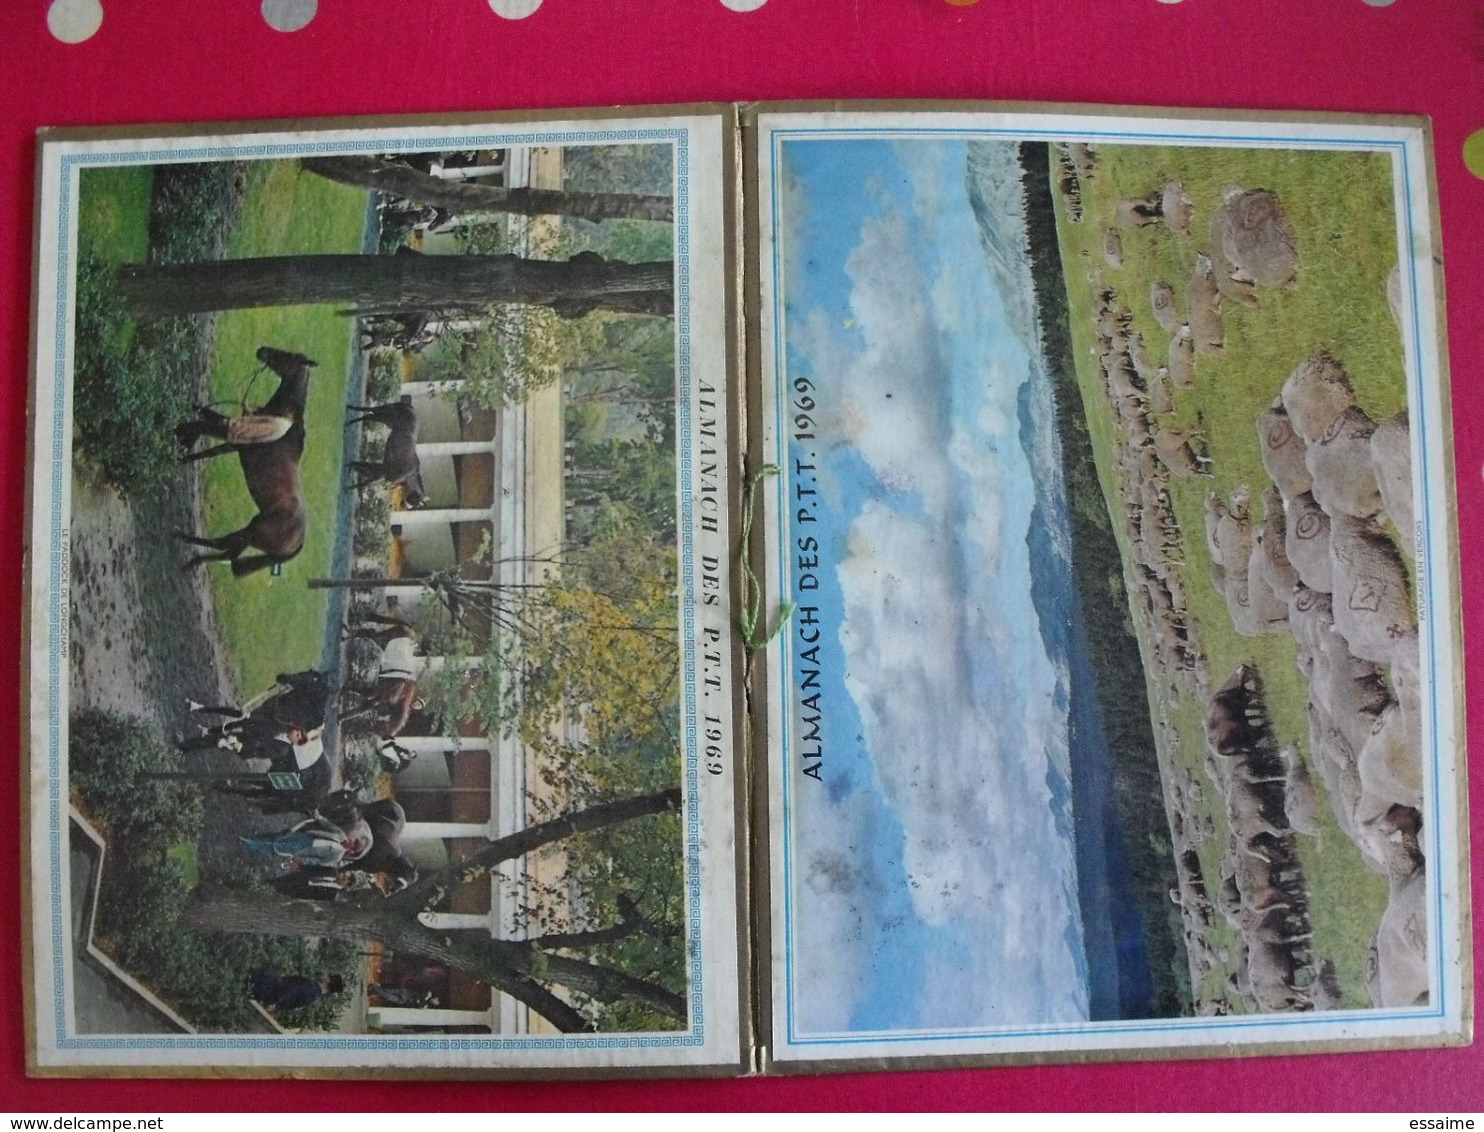 Almanach Des PTT. Cantal. Calendrier Poste 1969. Paddock De Longchamp, Paturage En Vercors - Grossformat : 1961-70